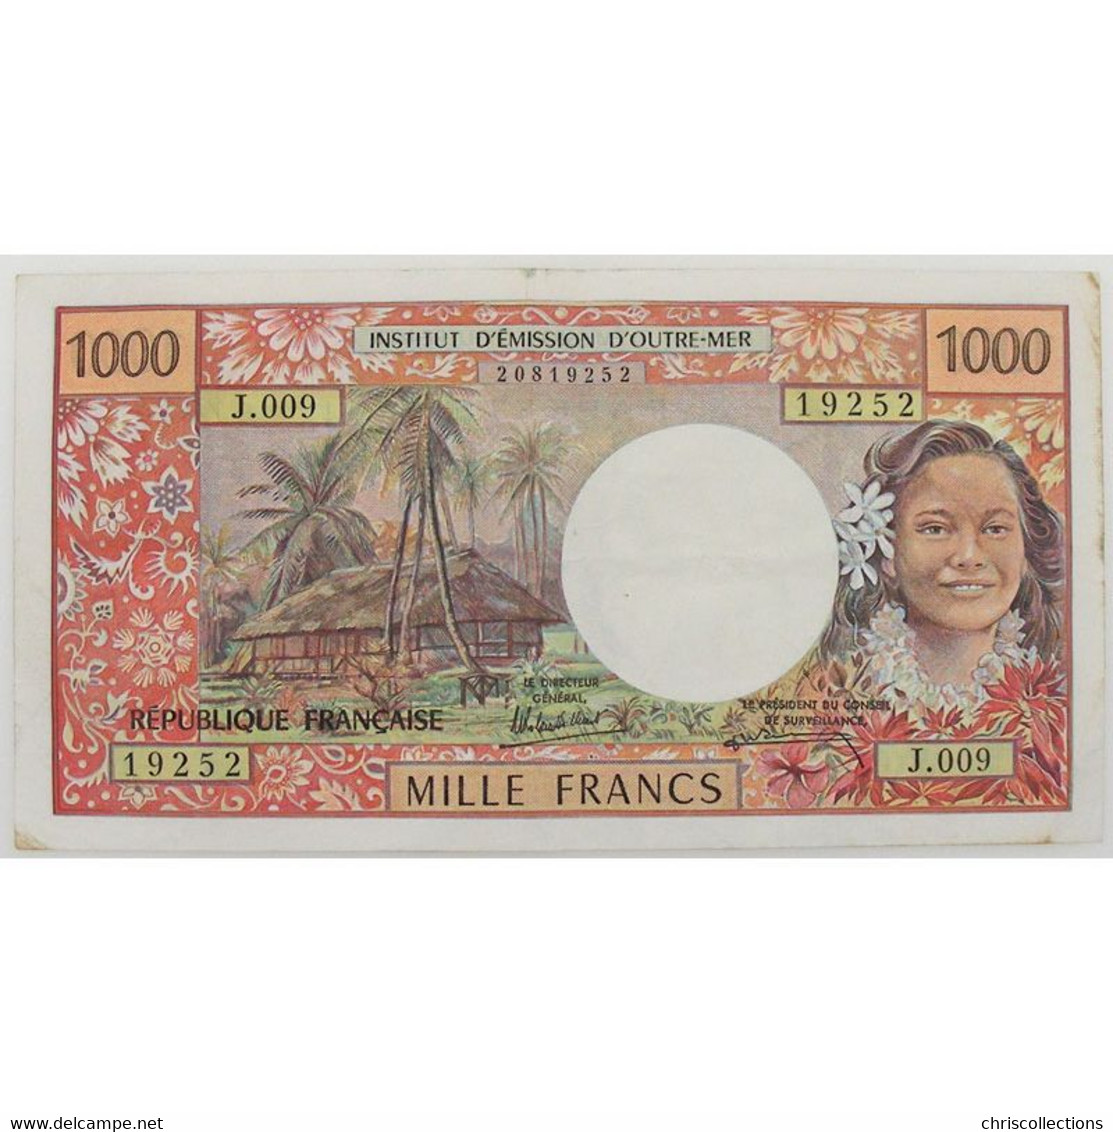 Tahiti, Papeete, 1000 Francs ND, J.009, VF/VF - Papeete (Polynésie Française 1914-1985)